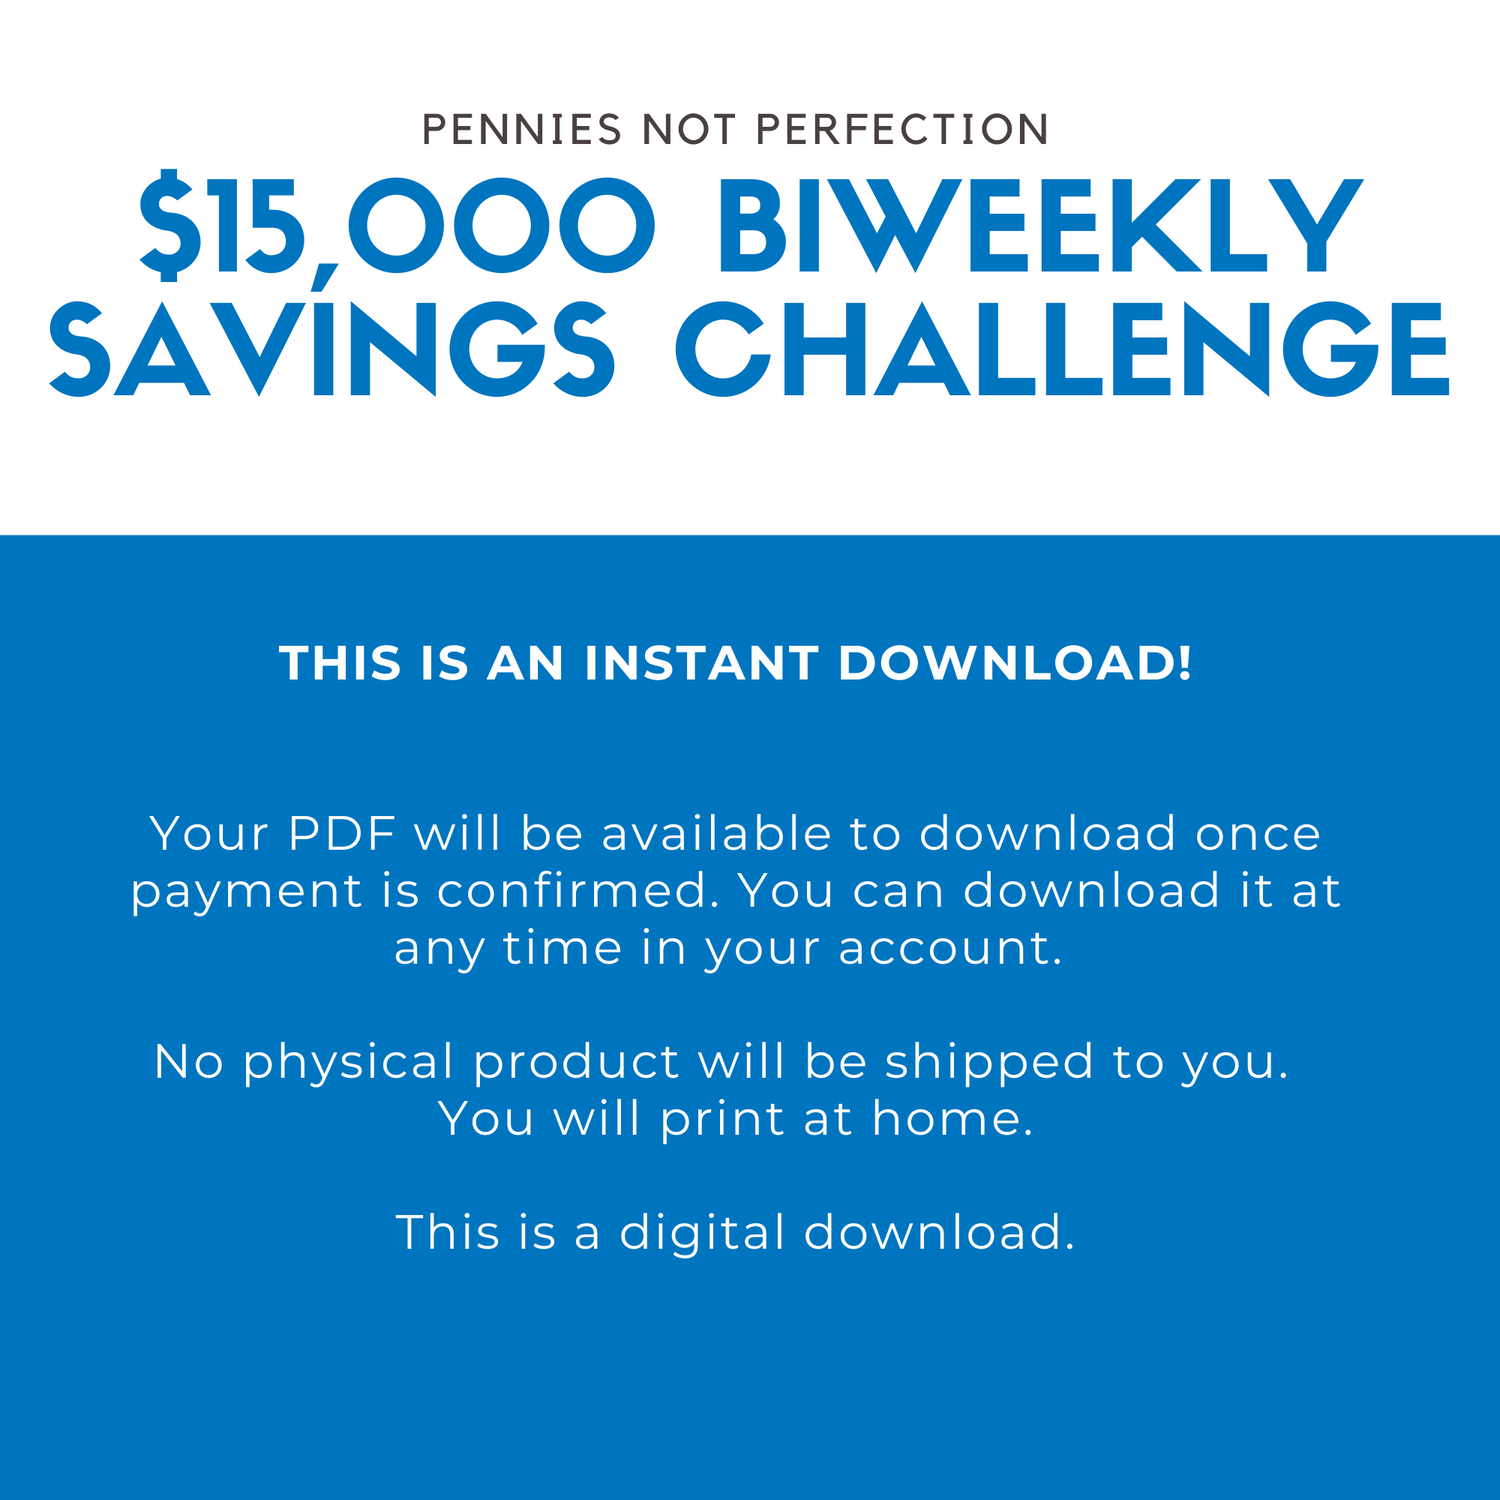 $15,000 Biweekly Savings Challenge Printable (Save $15,000 In One Year